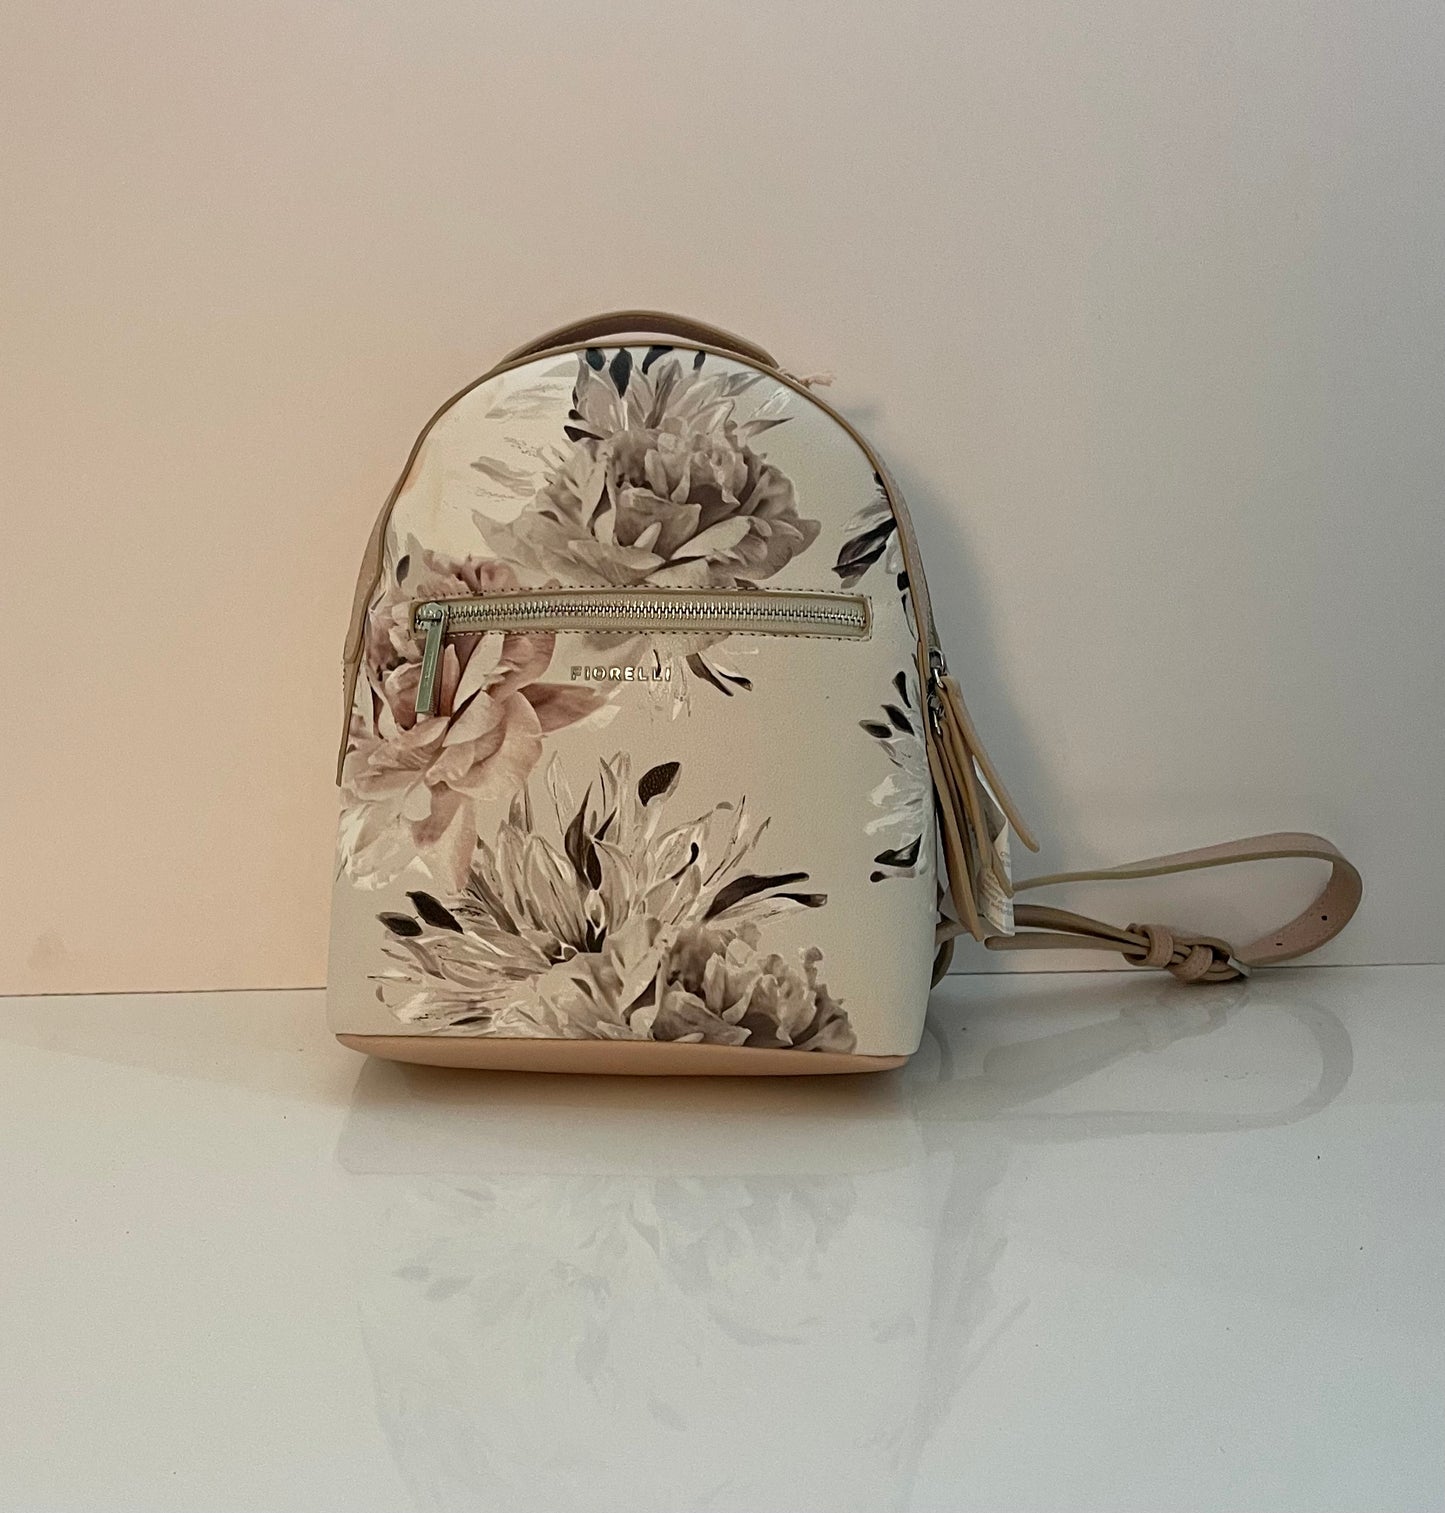 Fiorelli Windsor Floral Anouk Casual Grain Backpack